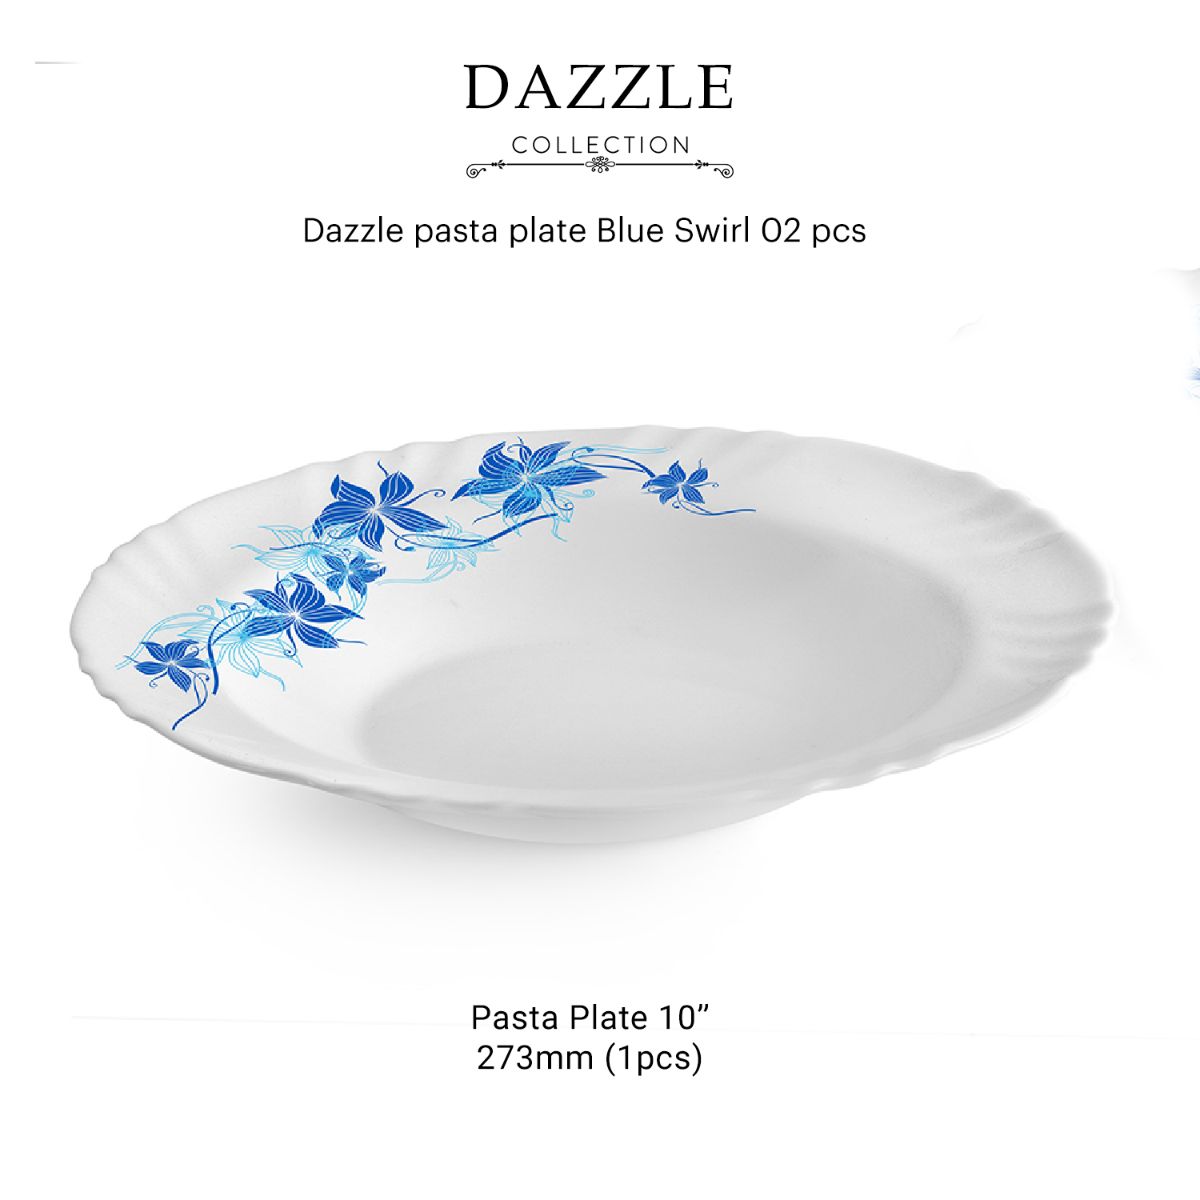 Dazzle Series Pasta Gift Set, 2 Pieces Blue Swirl / 2 Pieces